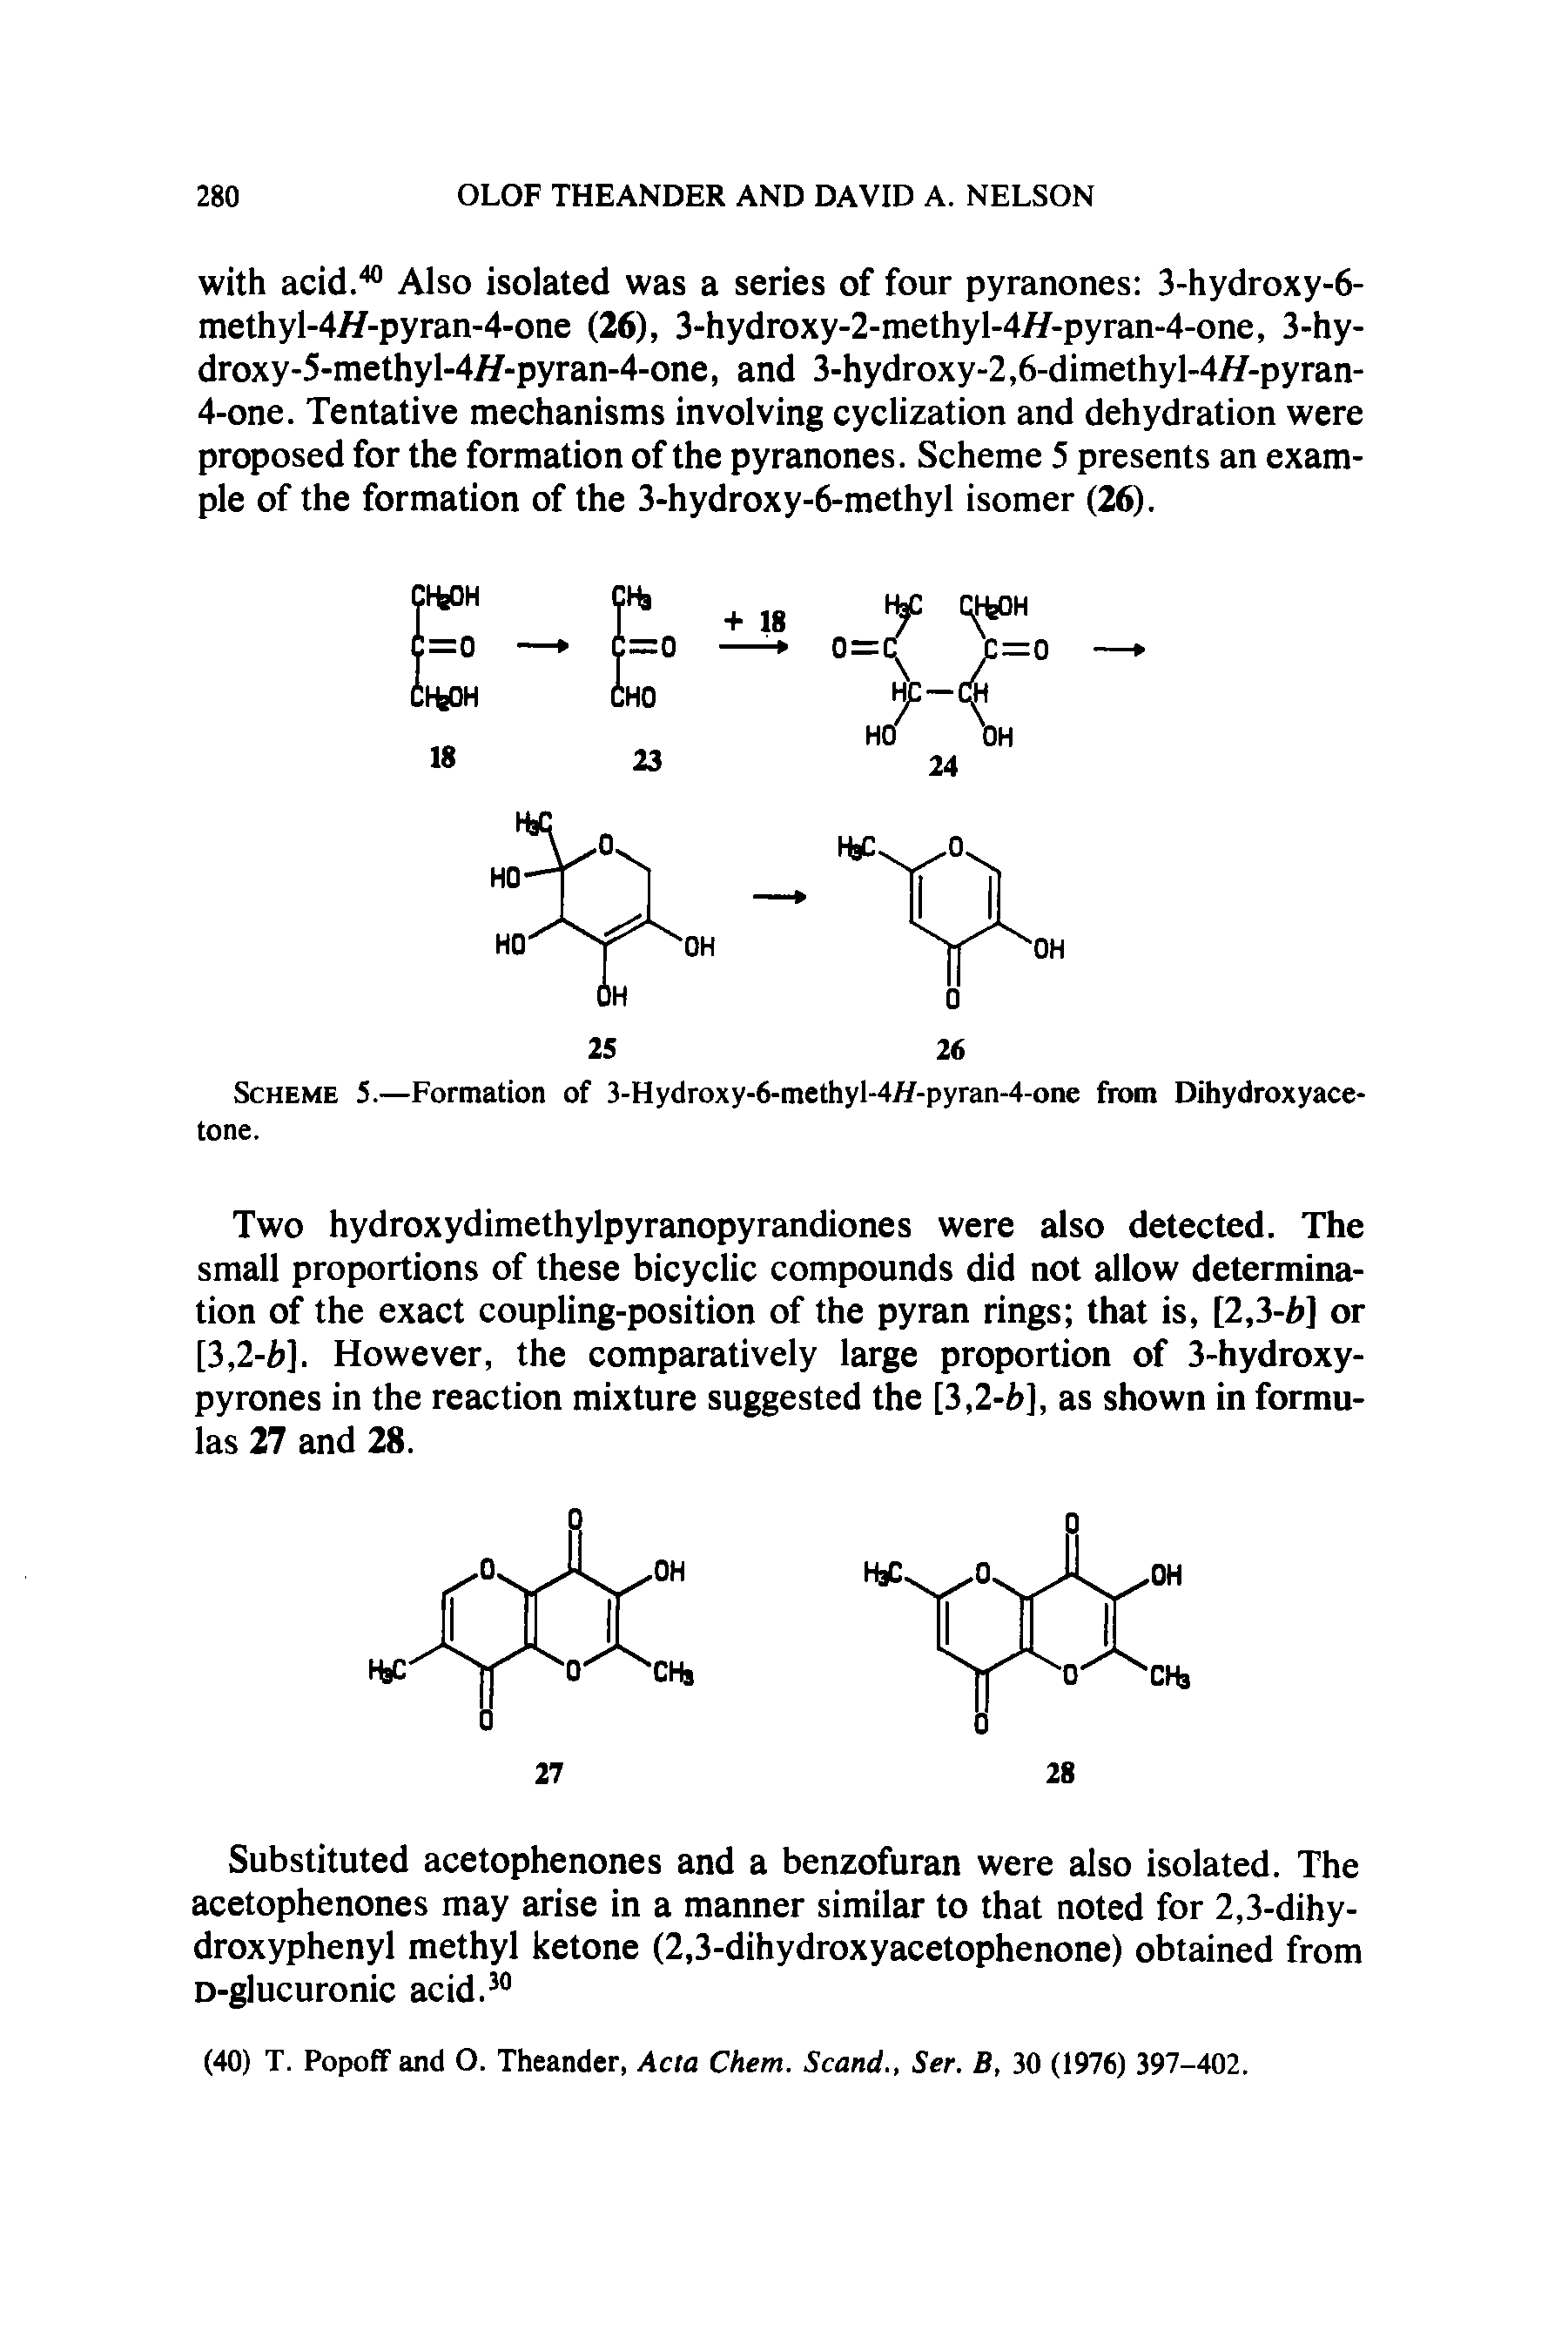 Scheme 5.—Formation of 3-Hydroxy-6-methyl-4//-pyran-4-one from Dihydroxyace-tone.